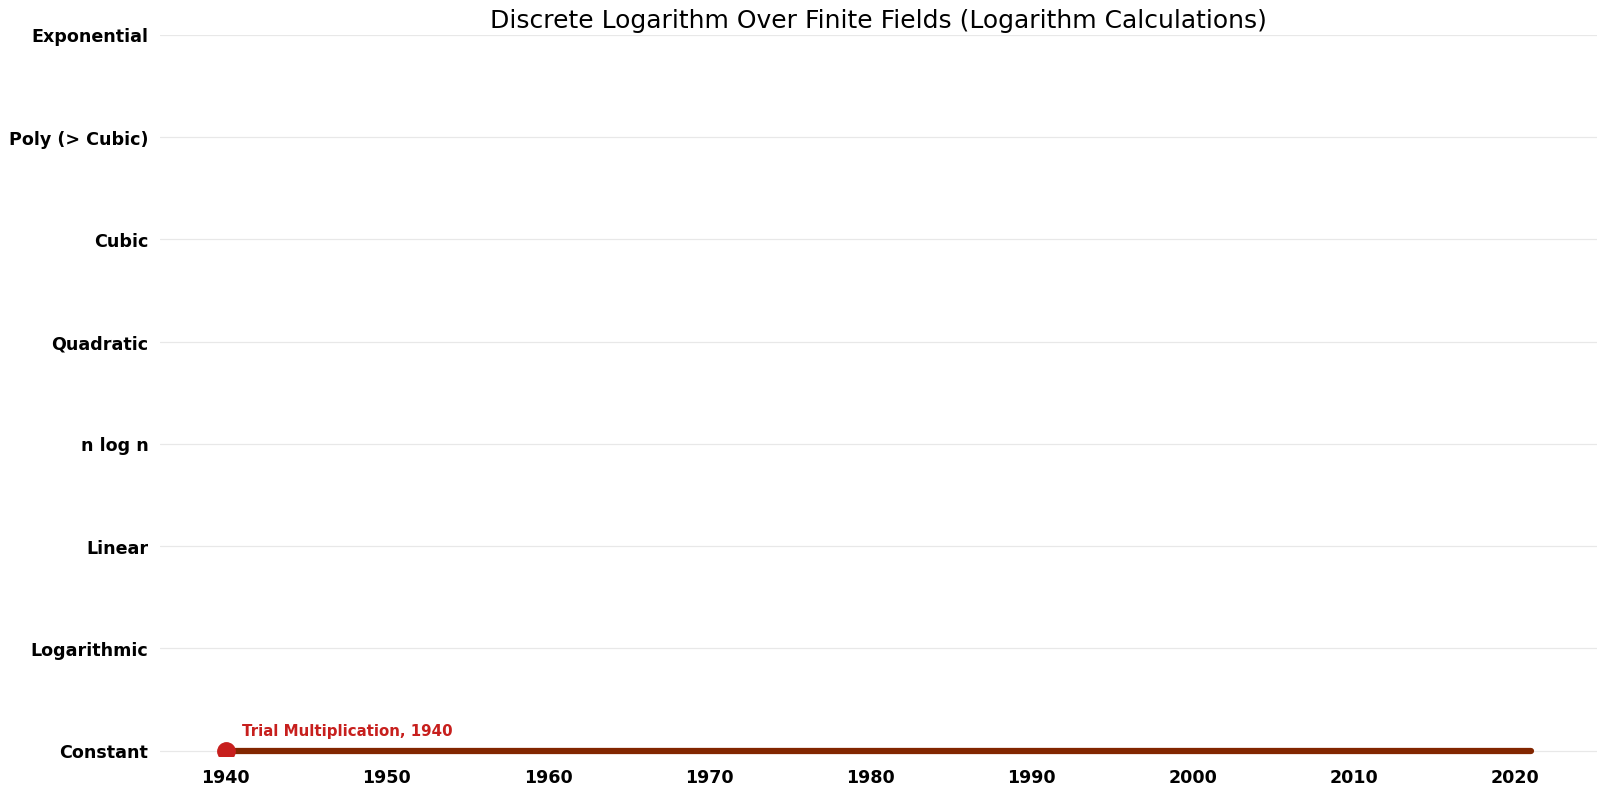 File:Logarithm Calculations - Discrete Logarithm Over Finite Fields - Space.png